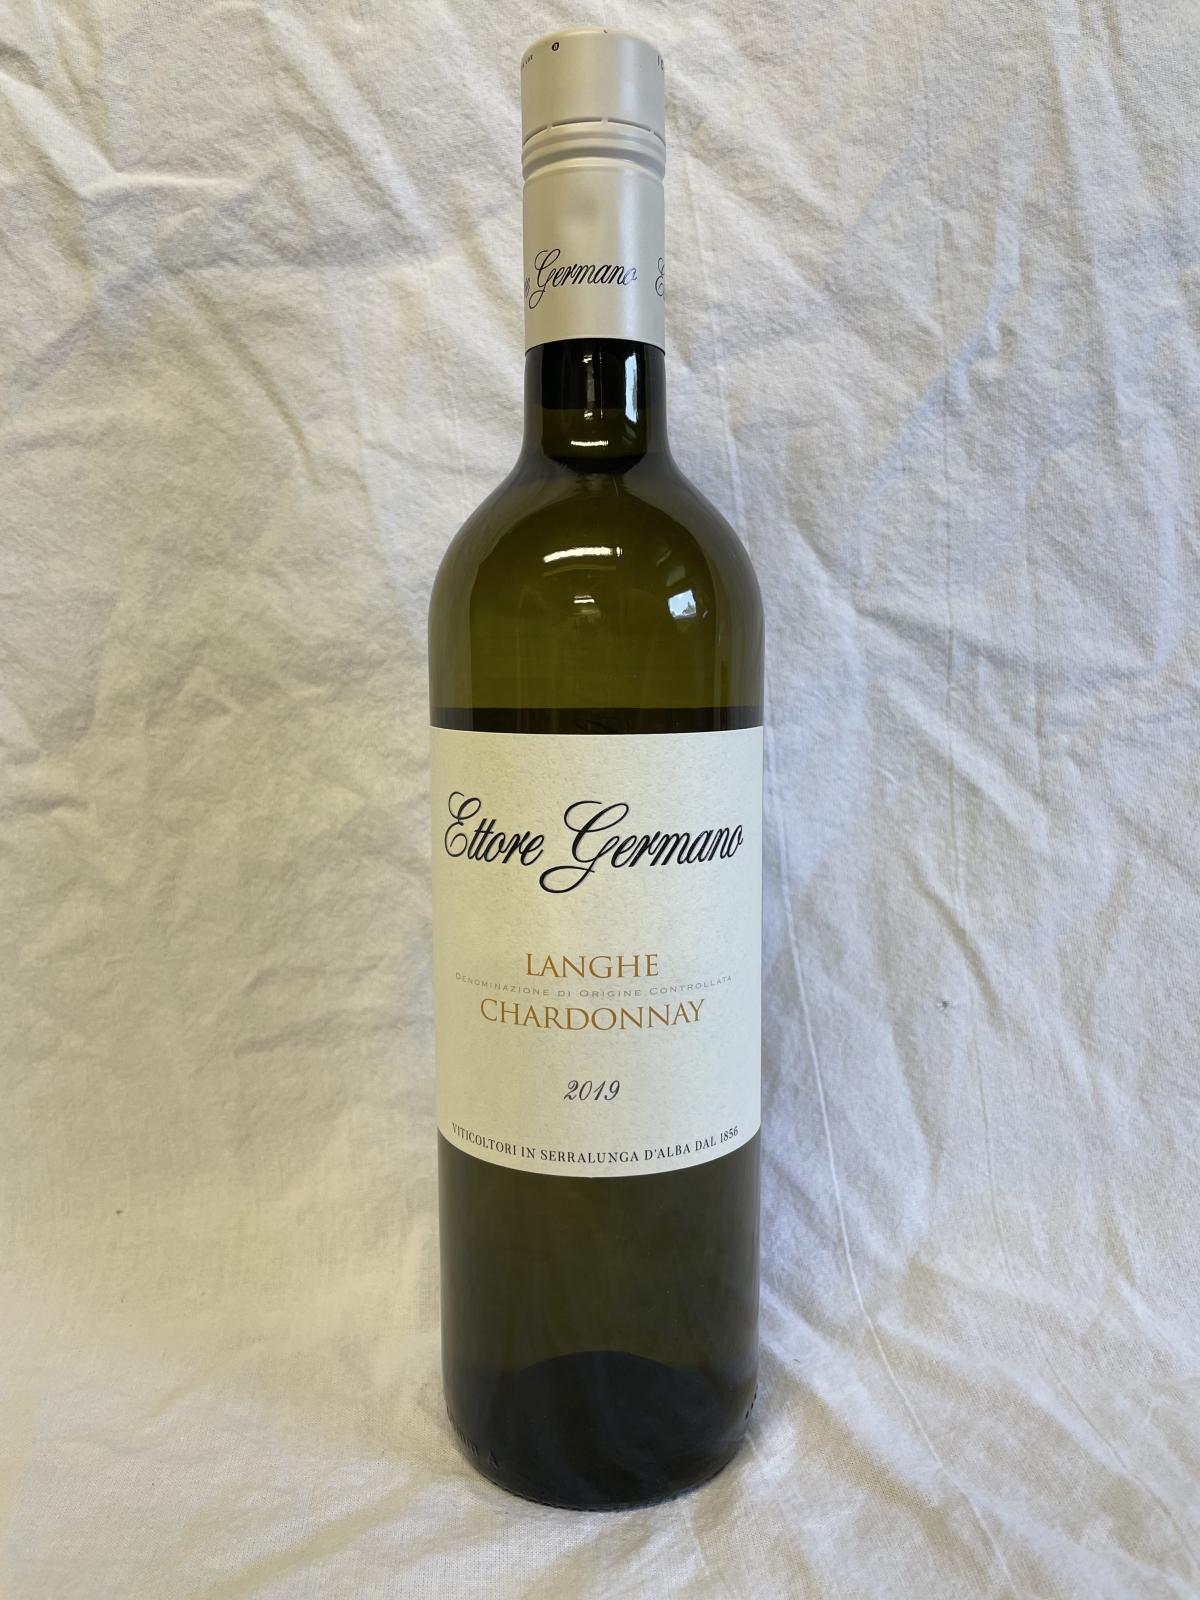 2019 Langhe Chardonnay Ettore Germano från Serralunga d'Alba, Piemonte via privatimport